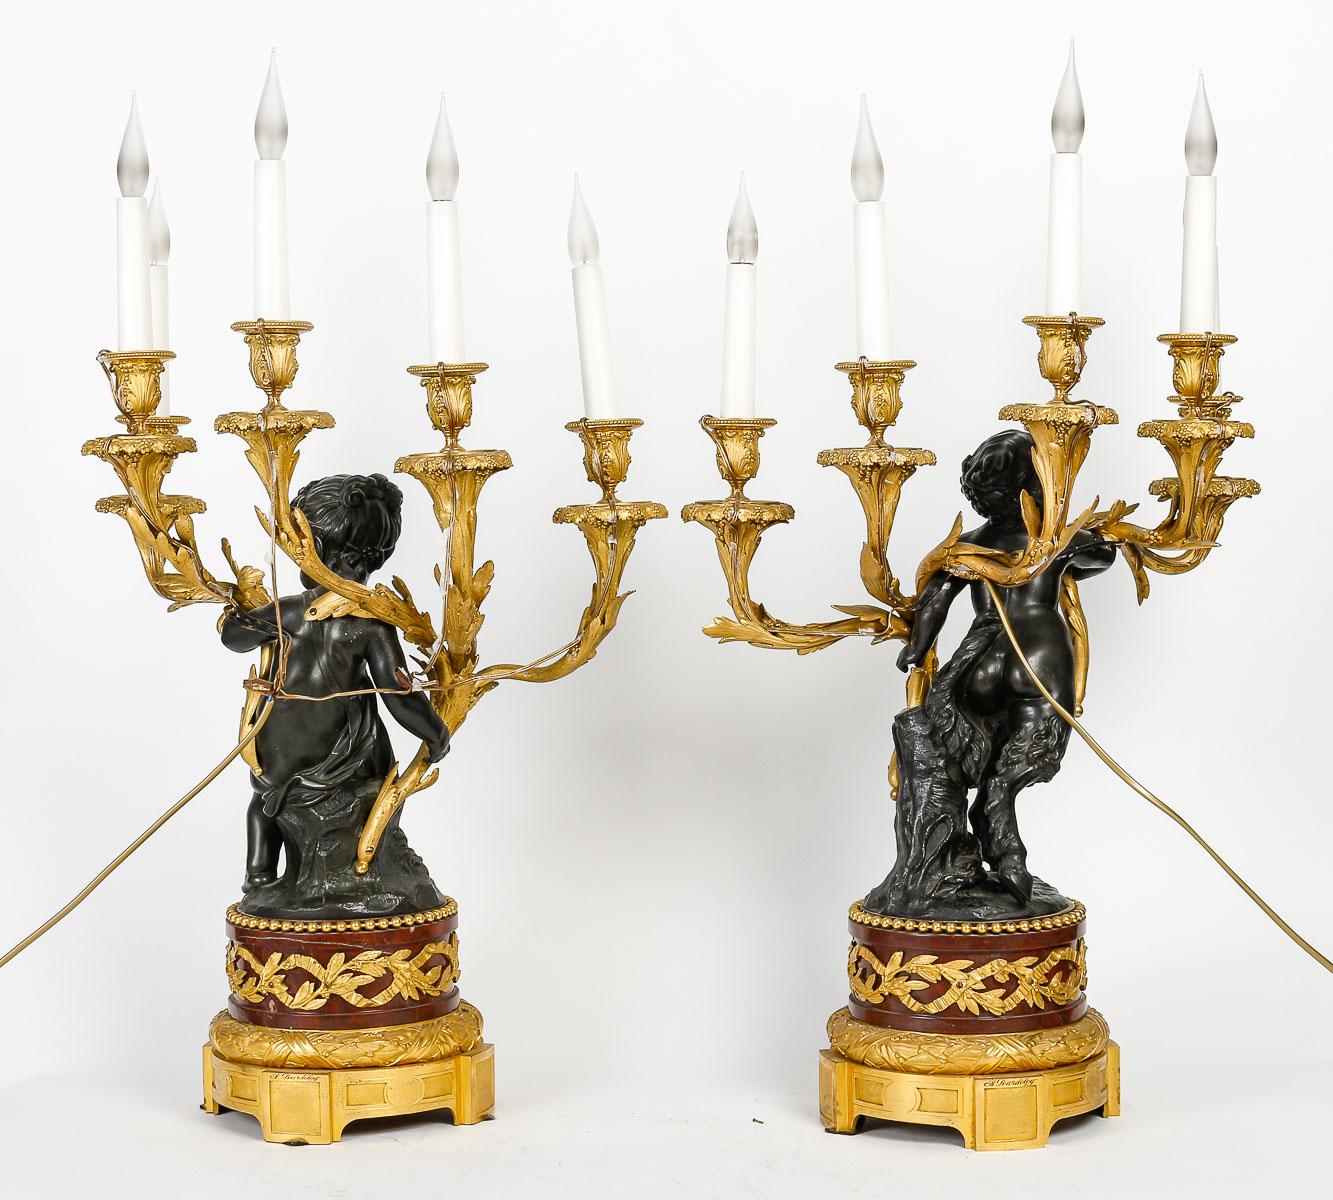 19th Century Pair of Amours Candelabra, Grande décoration, Gilt bronze, Antique bronze.